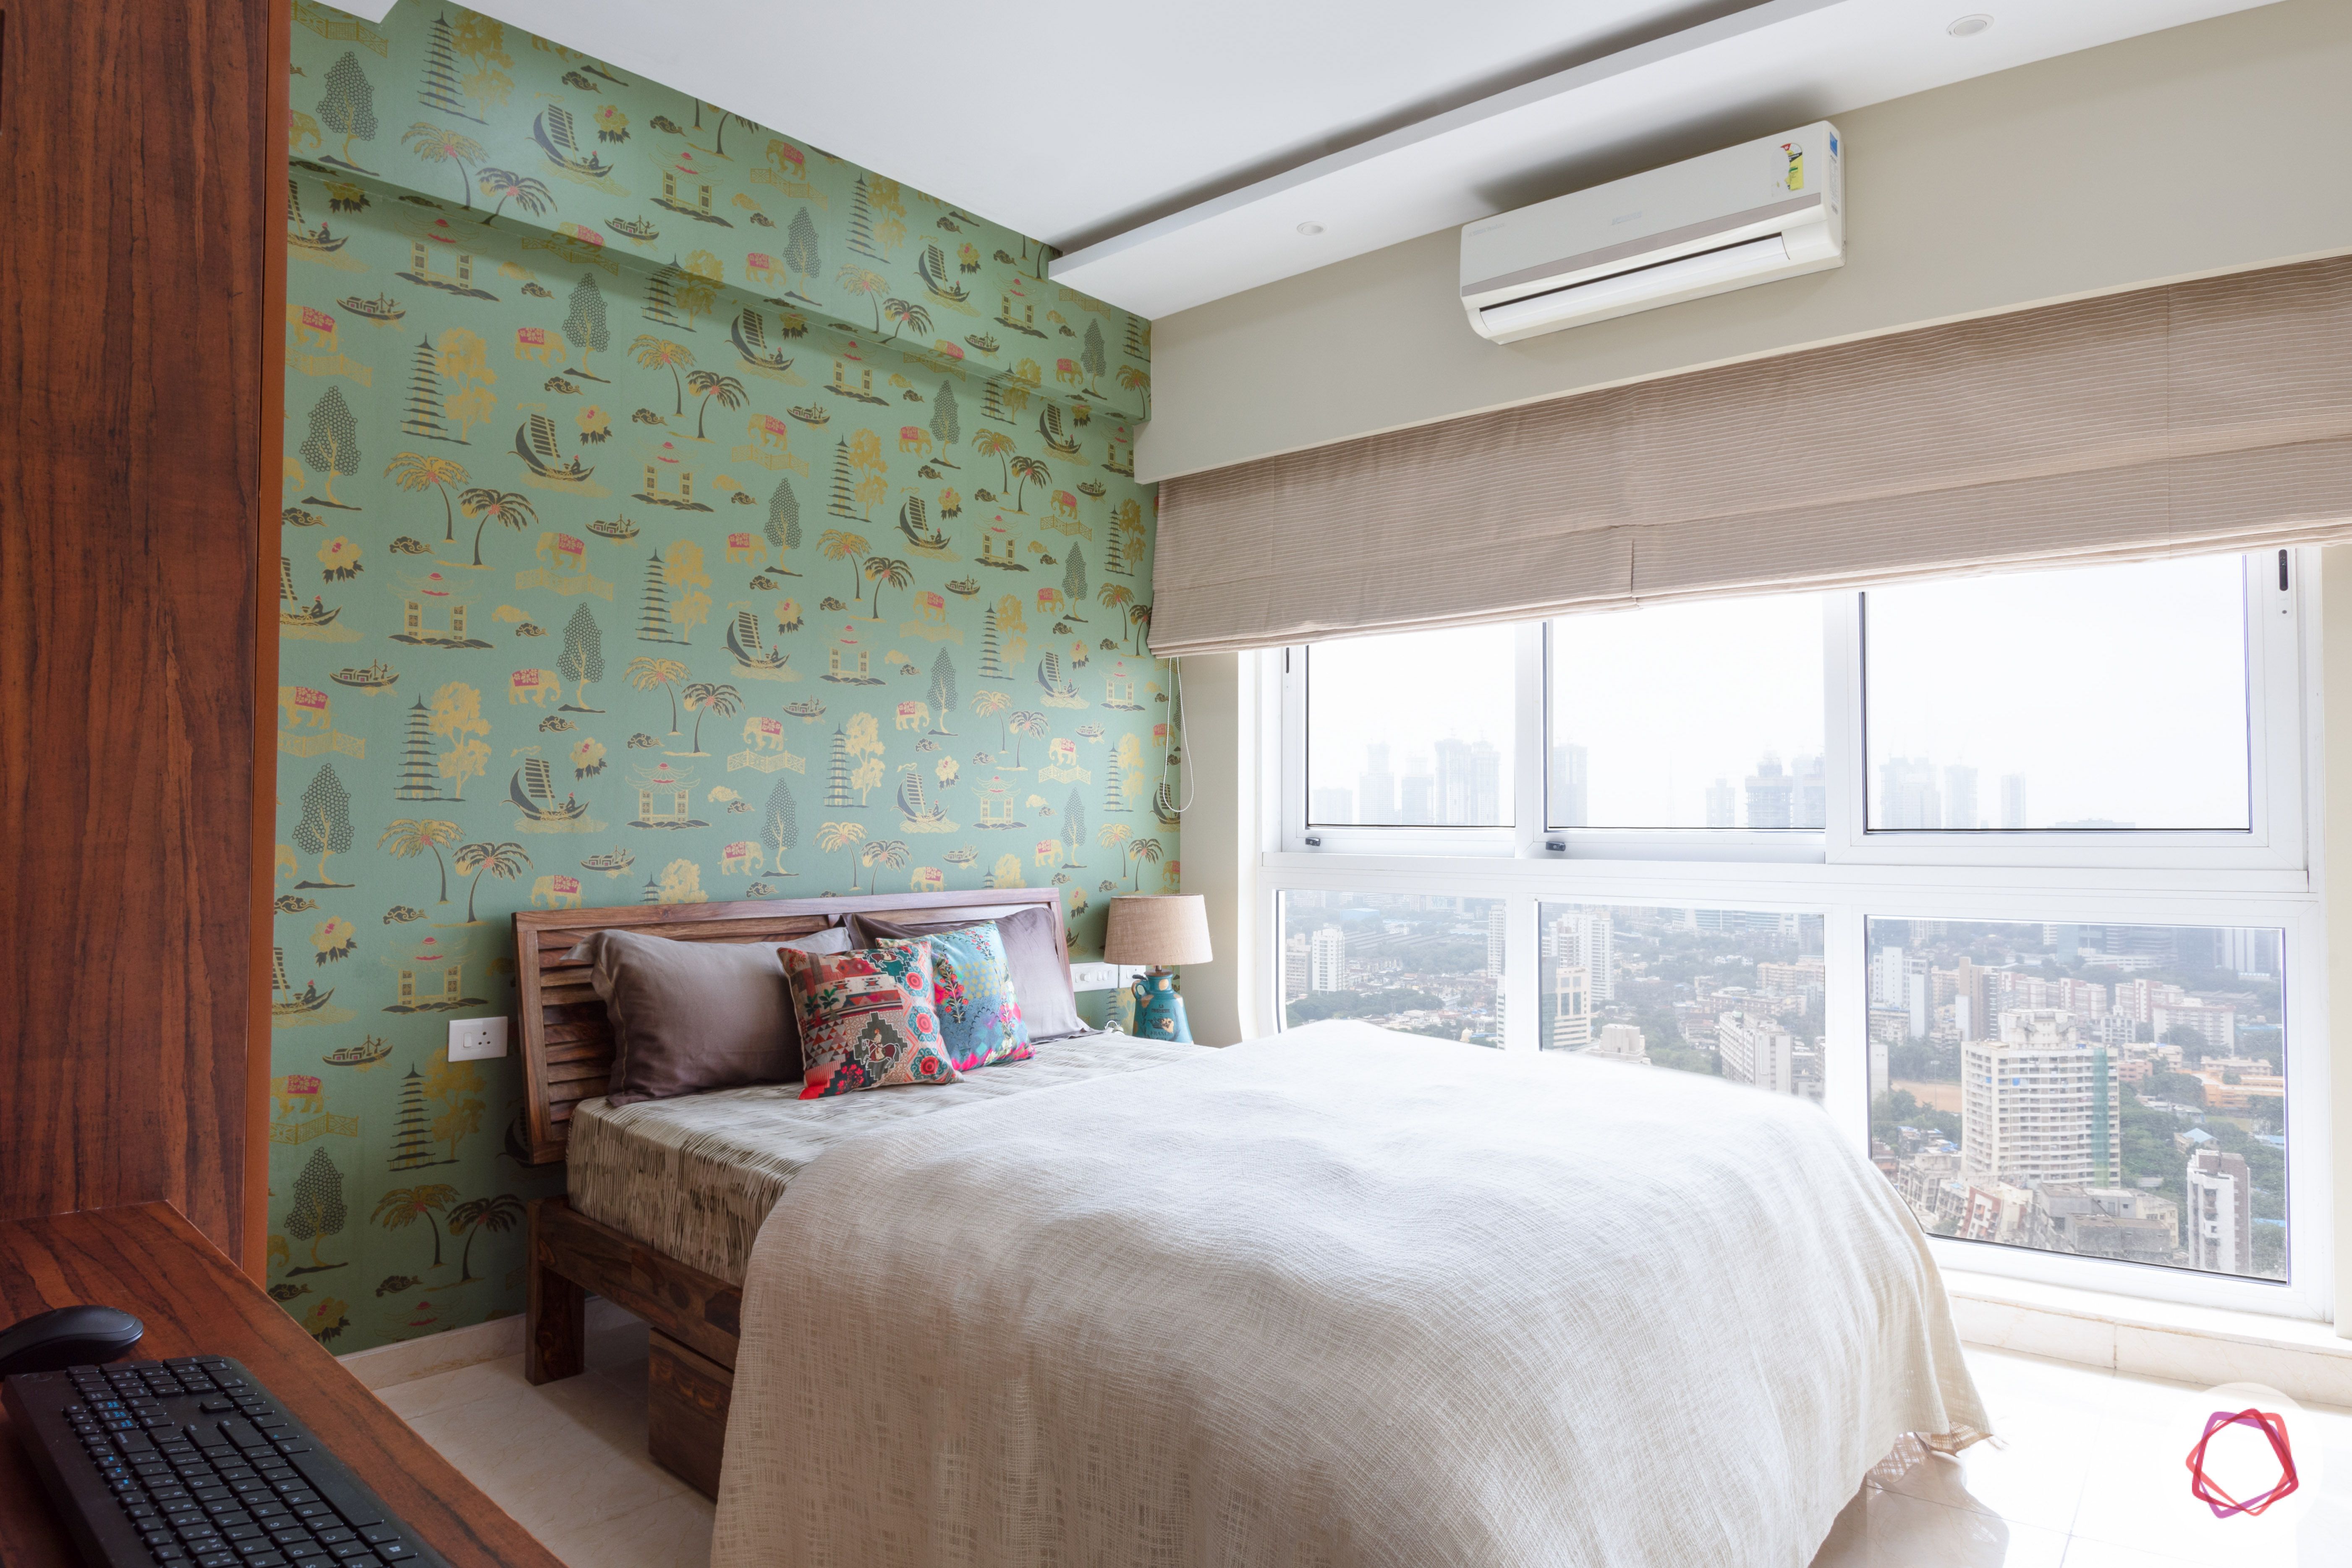 crescent bay-guest bedroom-green wallpaper-windows-blinds